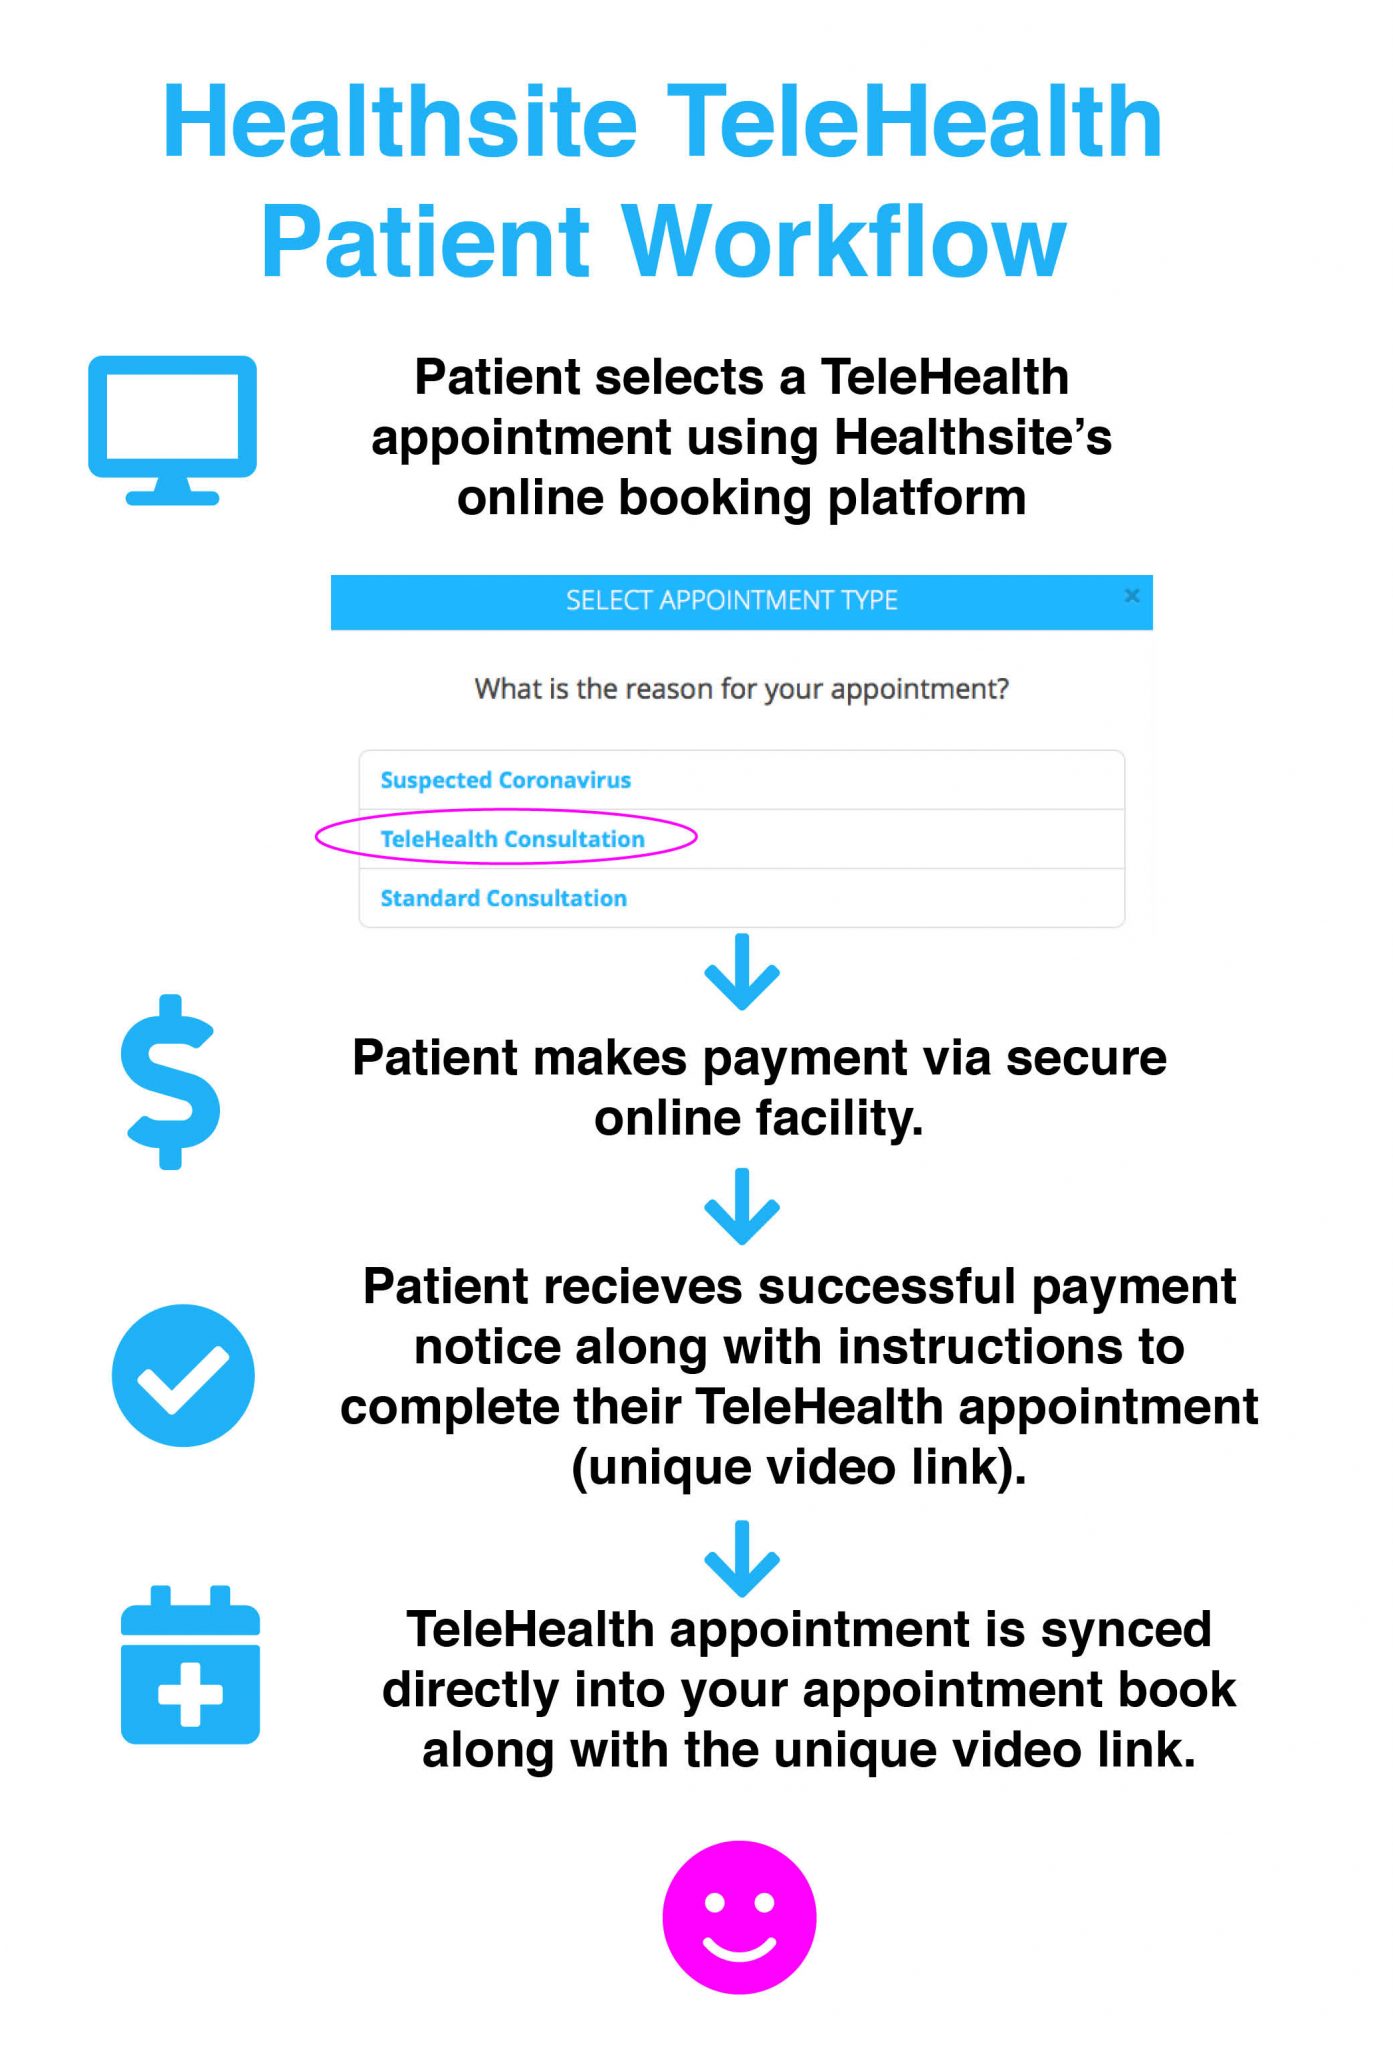 Healthsite TeleHealth Workflow